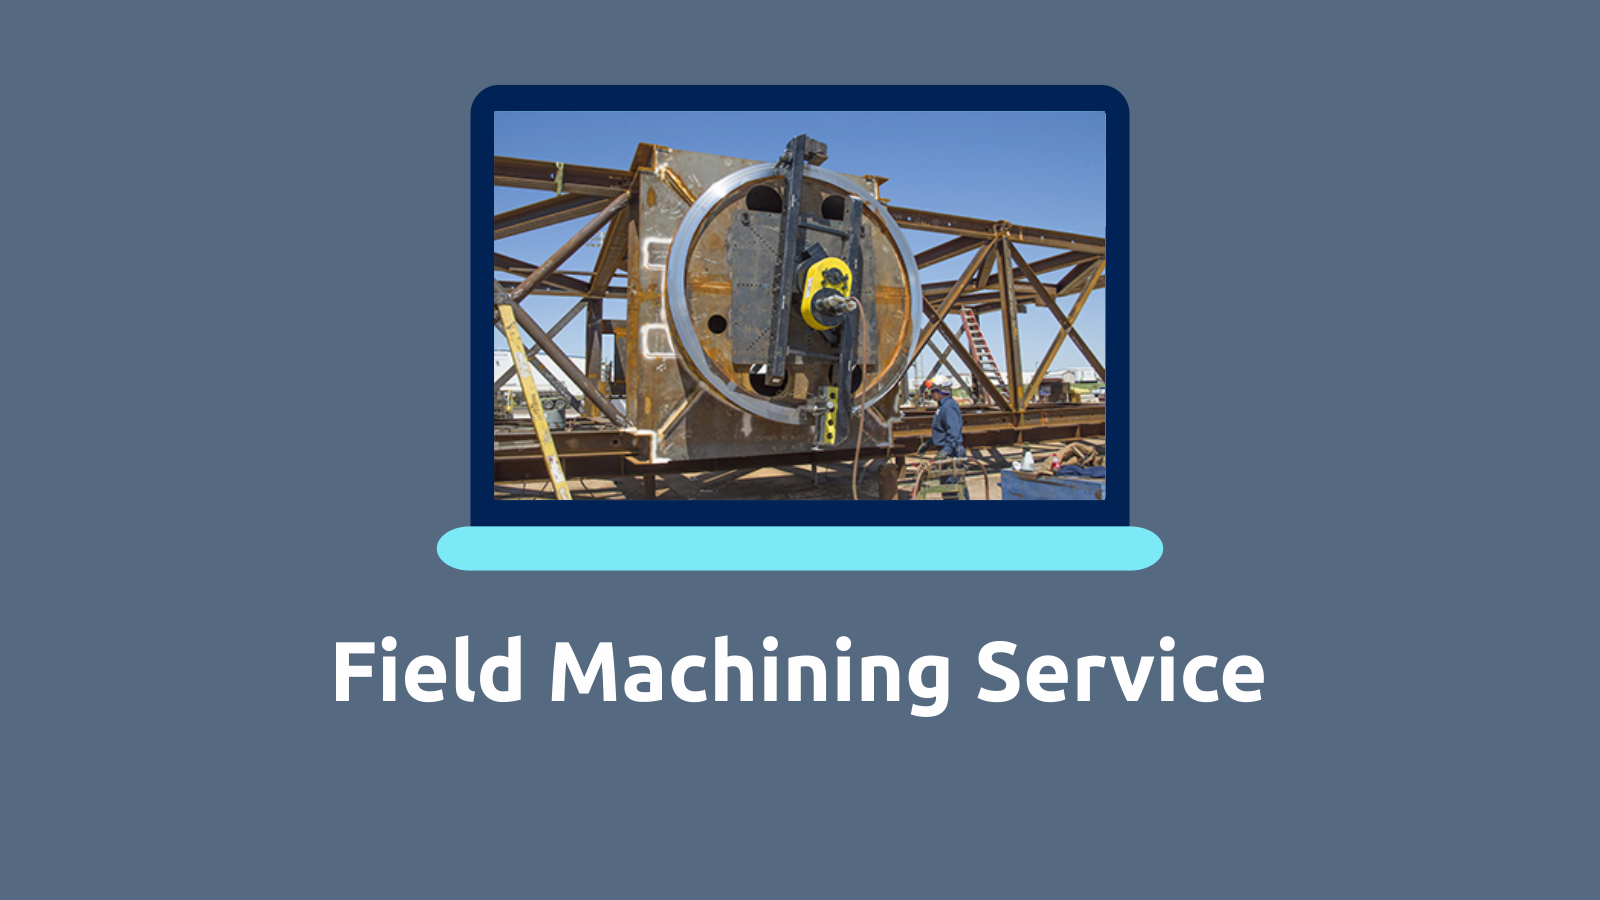 Field Machining Service